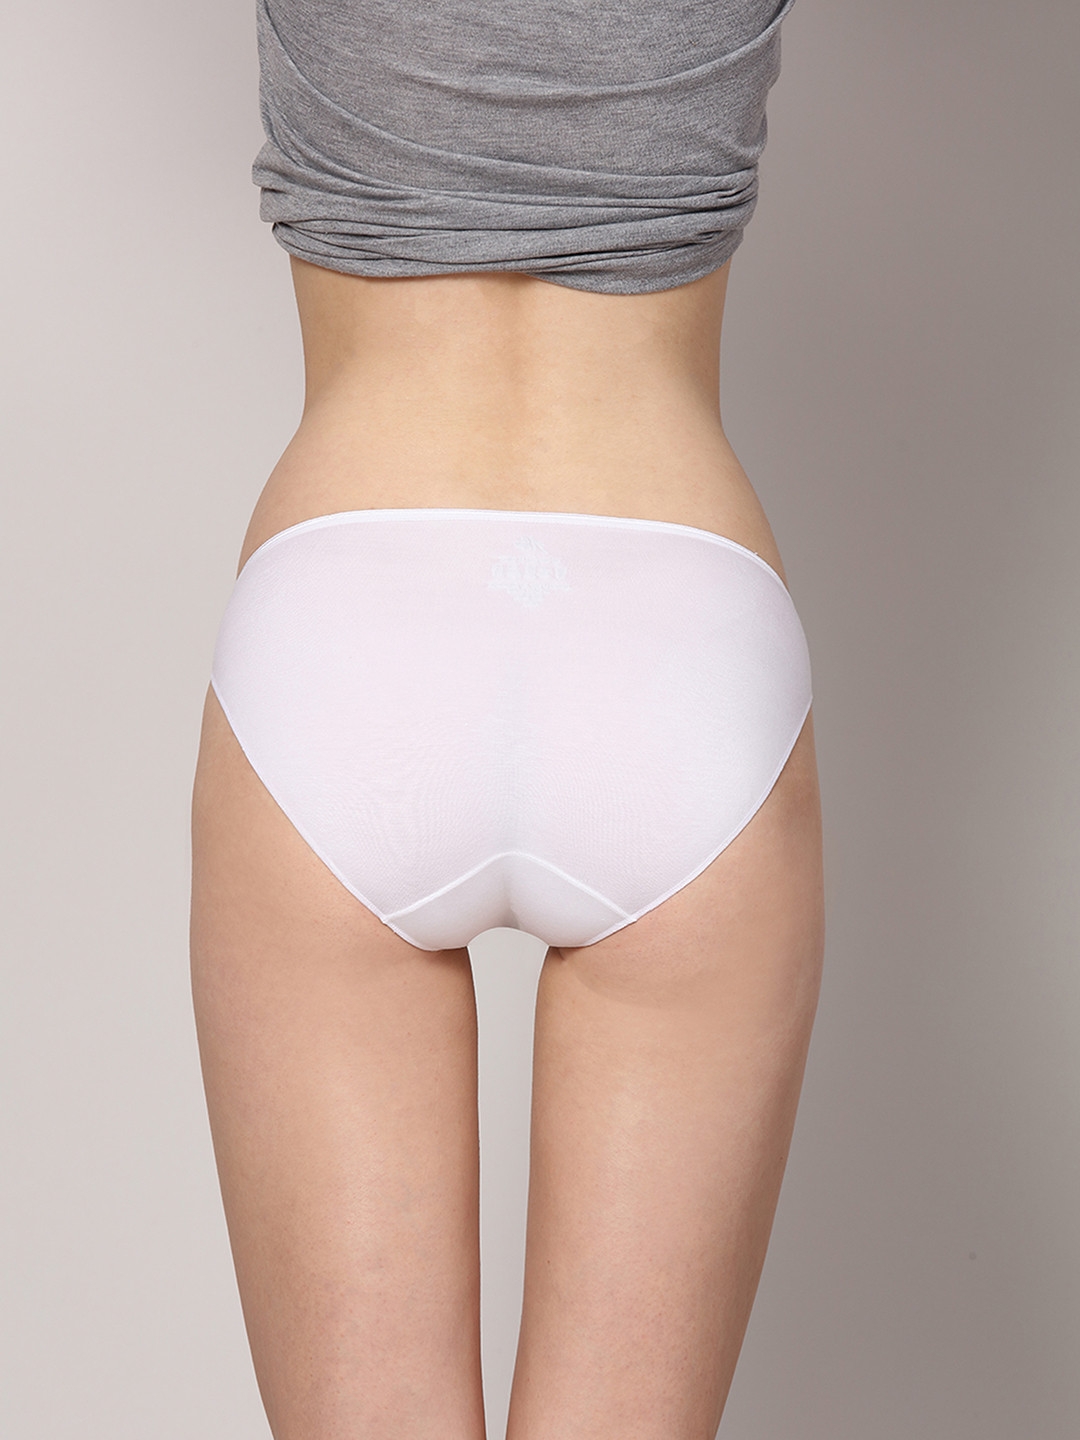 AshleyandAlvis Women's Panties Micro Modal, Anti Bacterial, Skinny Soft, Premium Bikini-No Itching, Sweat Proof, Double In-seam Gusset